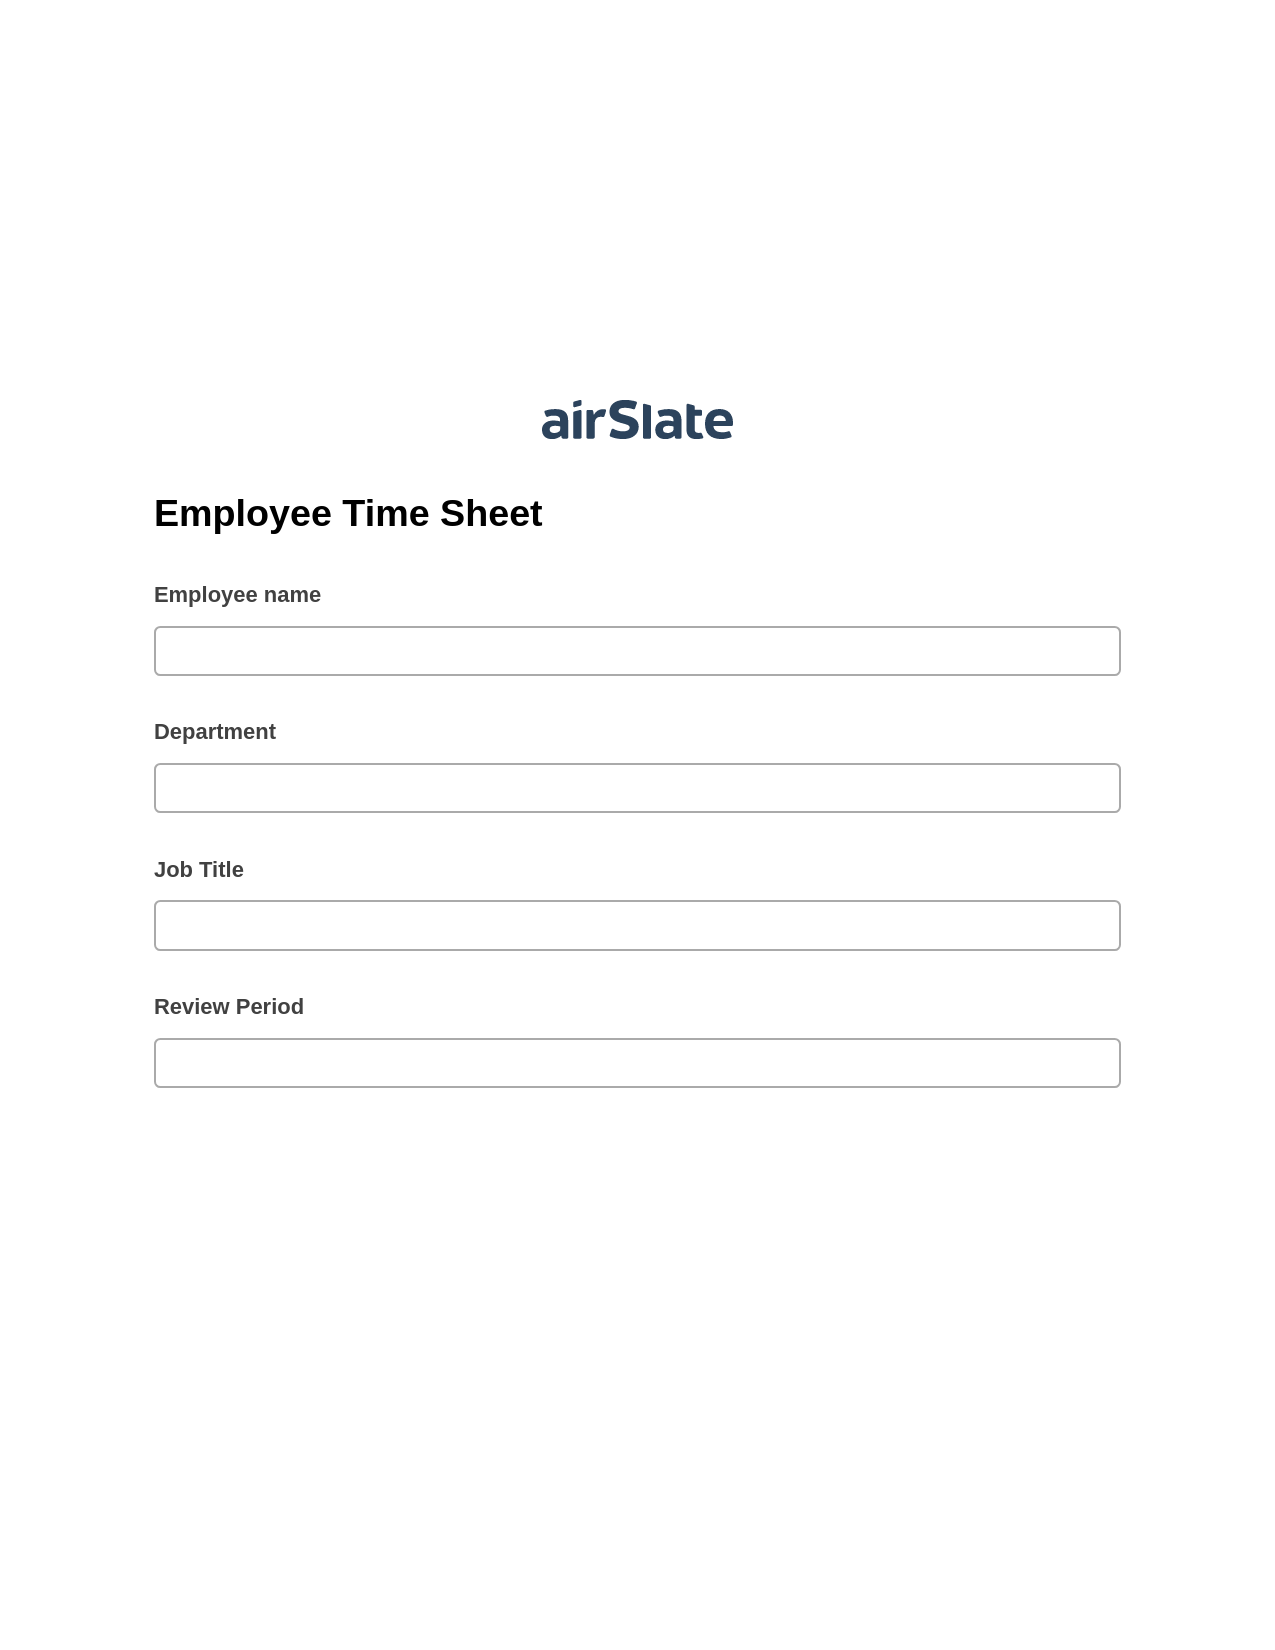 Employee Time Sheet Pre-fill from MySQL Bot, Create Slate every Google Sheet Update Bot, Archive to Dropbox Bot